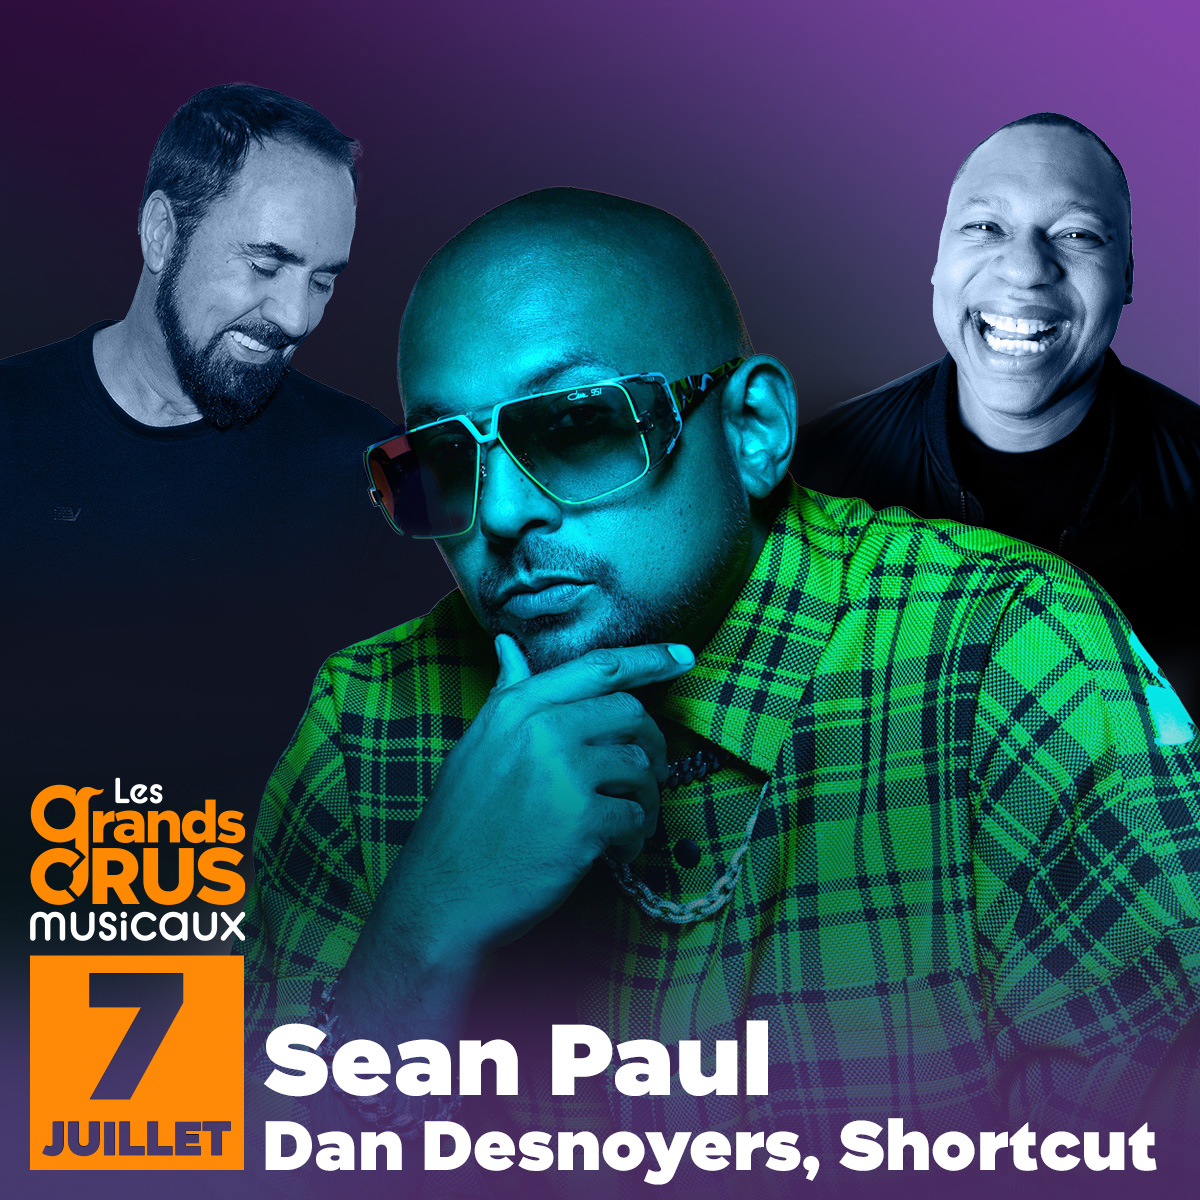 Sean Paul - Les grands crus musicaux